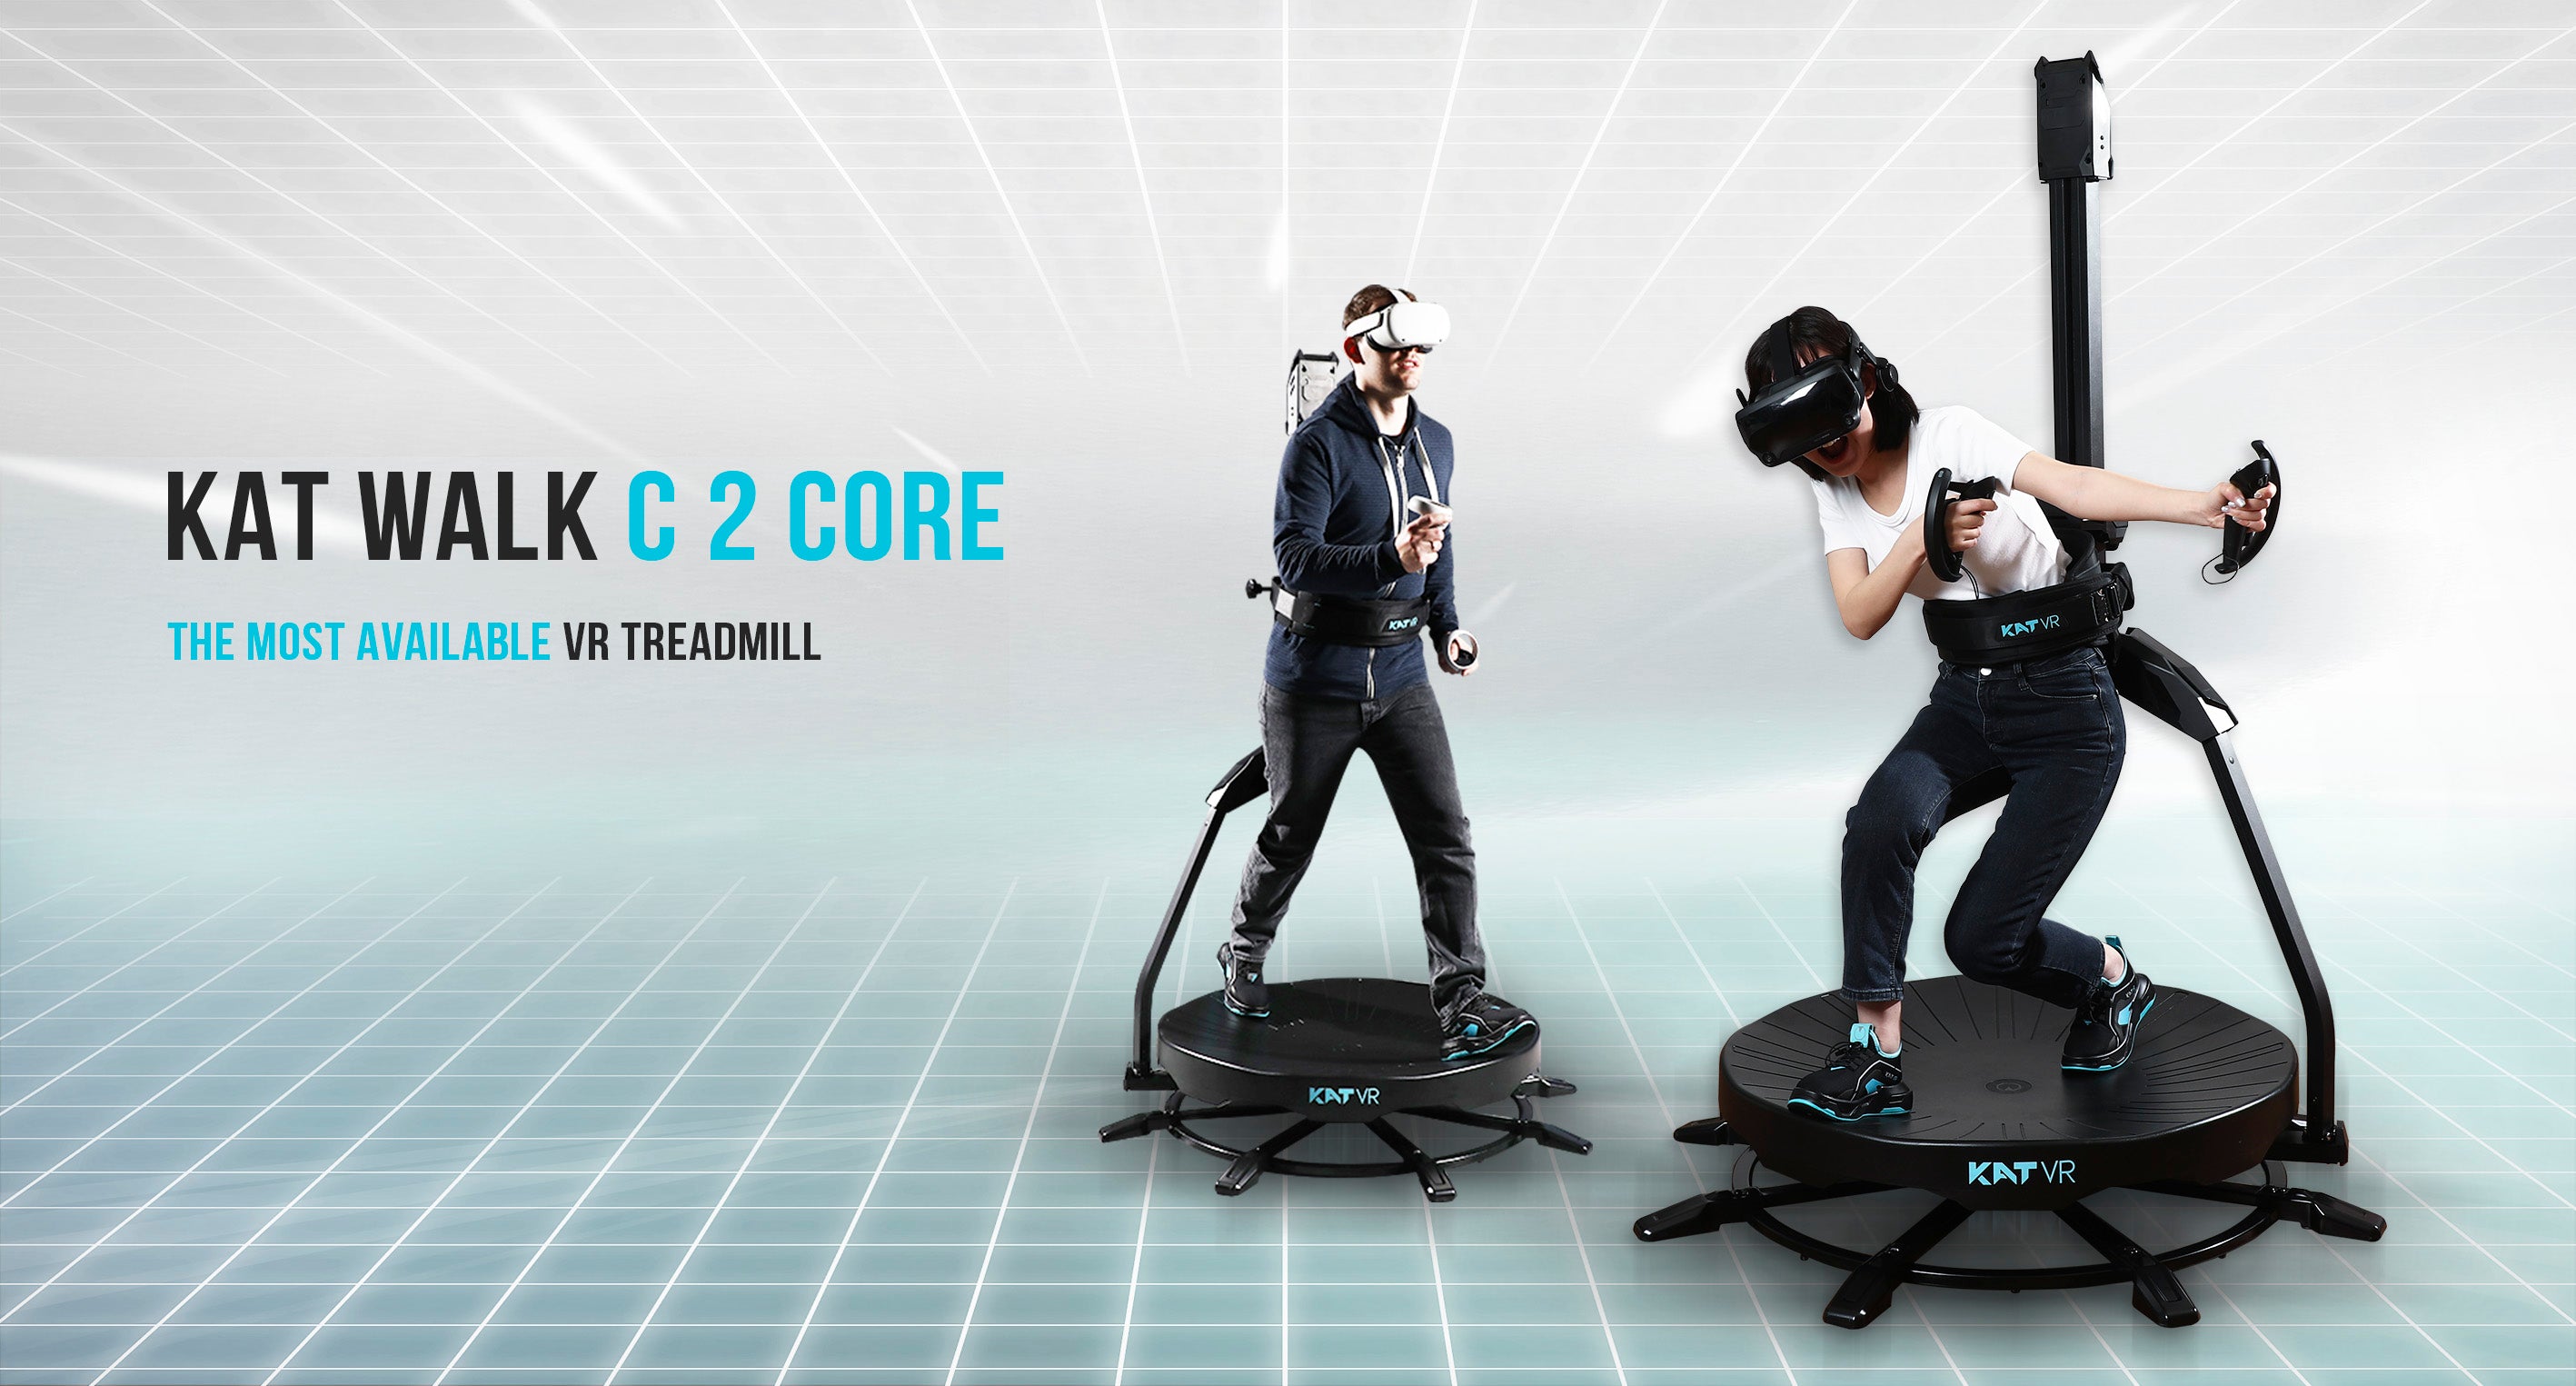 VR Treadmills and Motion platforms.